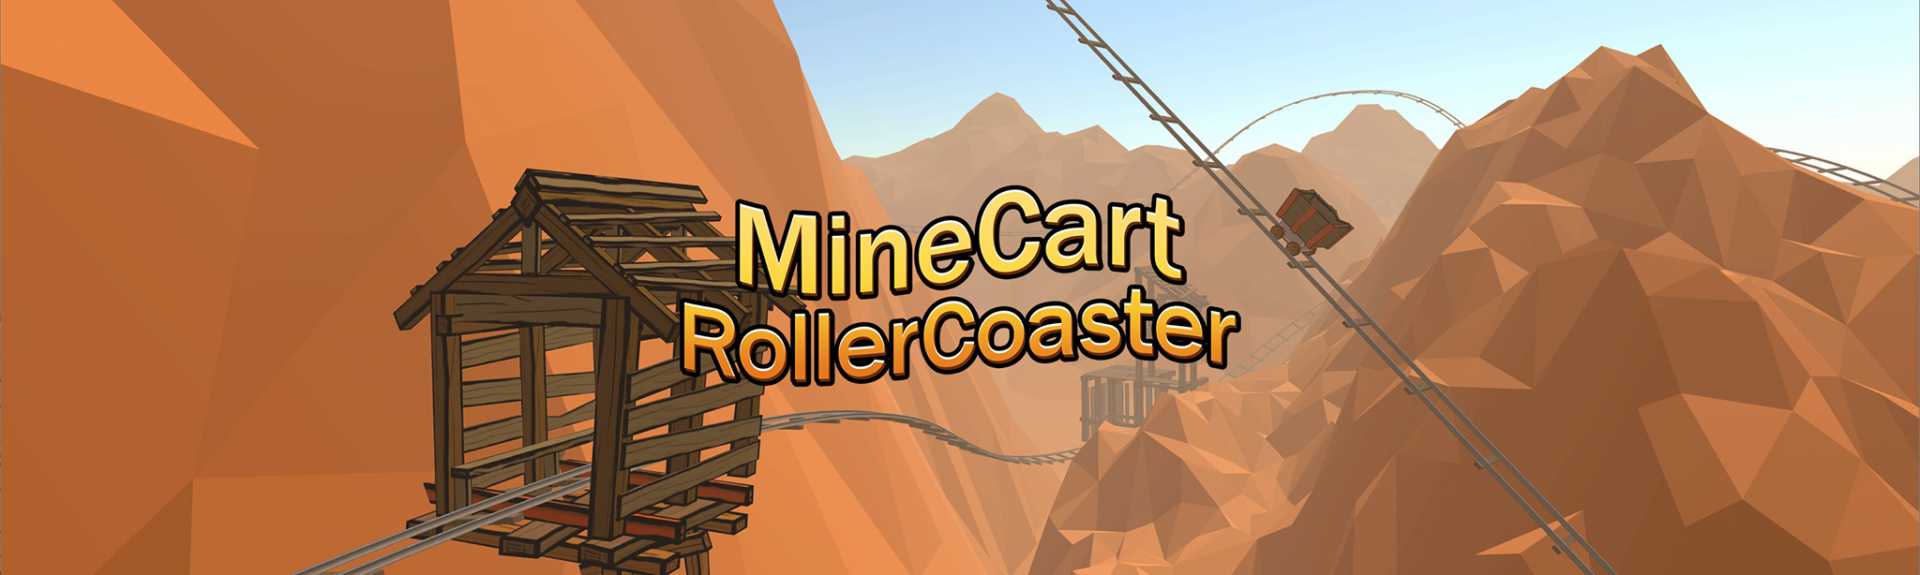 Free Mine Cart Roller Coaster Ride